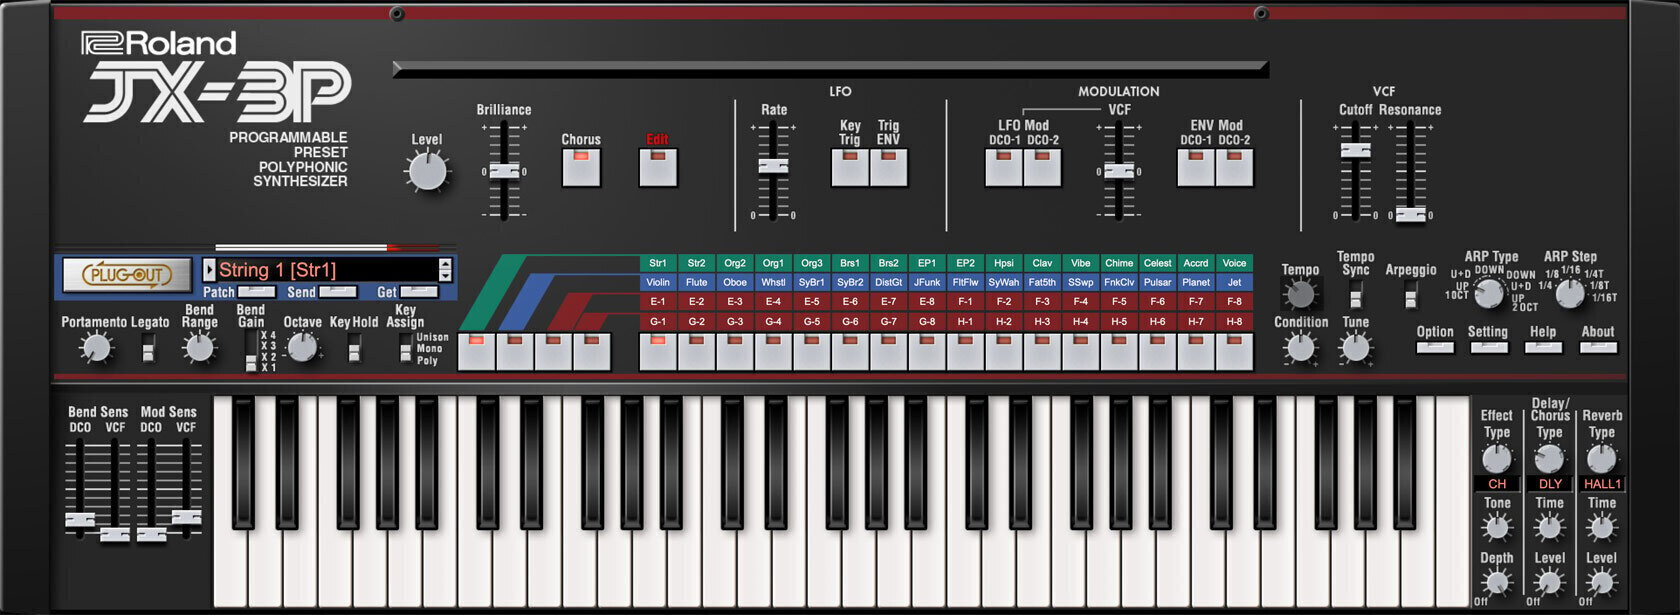 Program VST Instrument Studio Roland JX-3P Key (Produs digital)